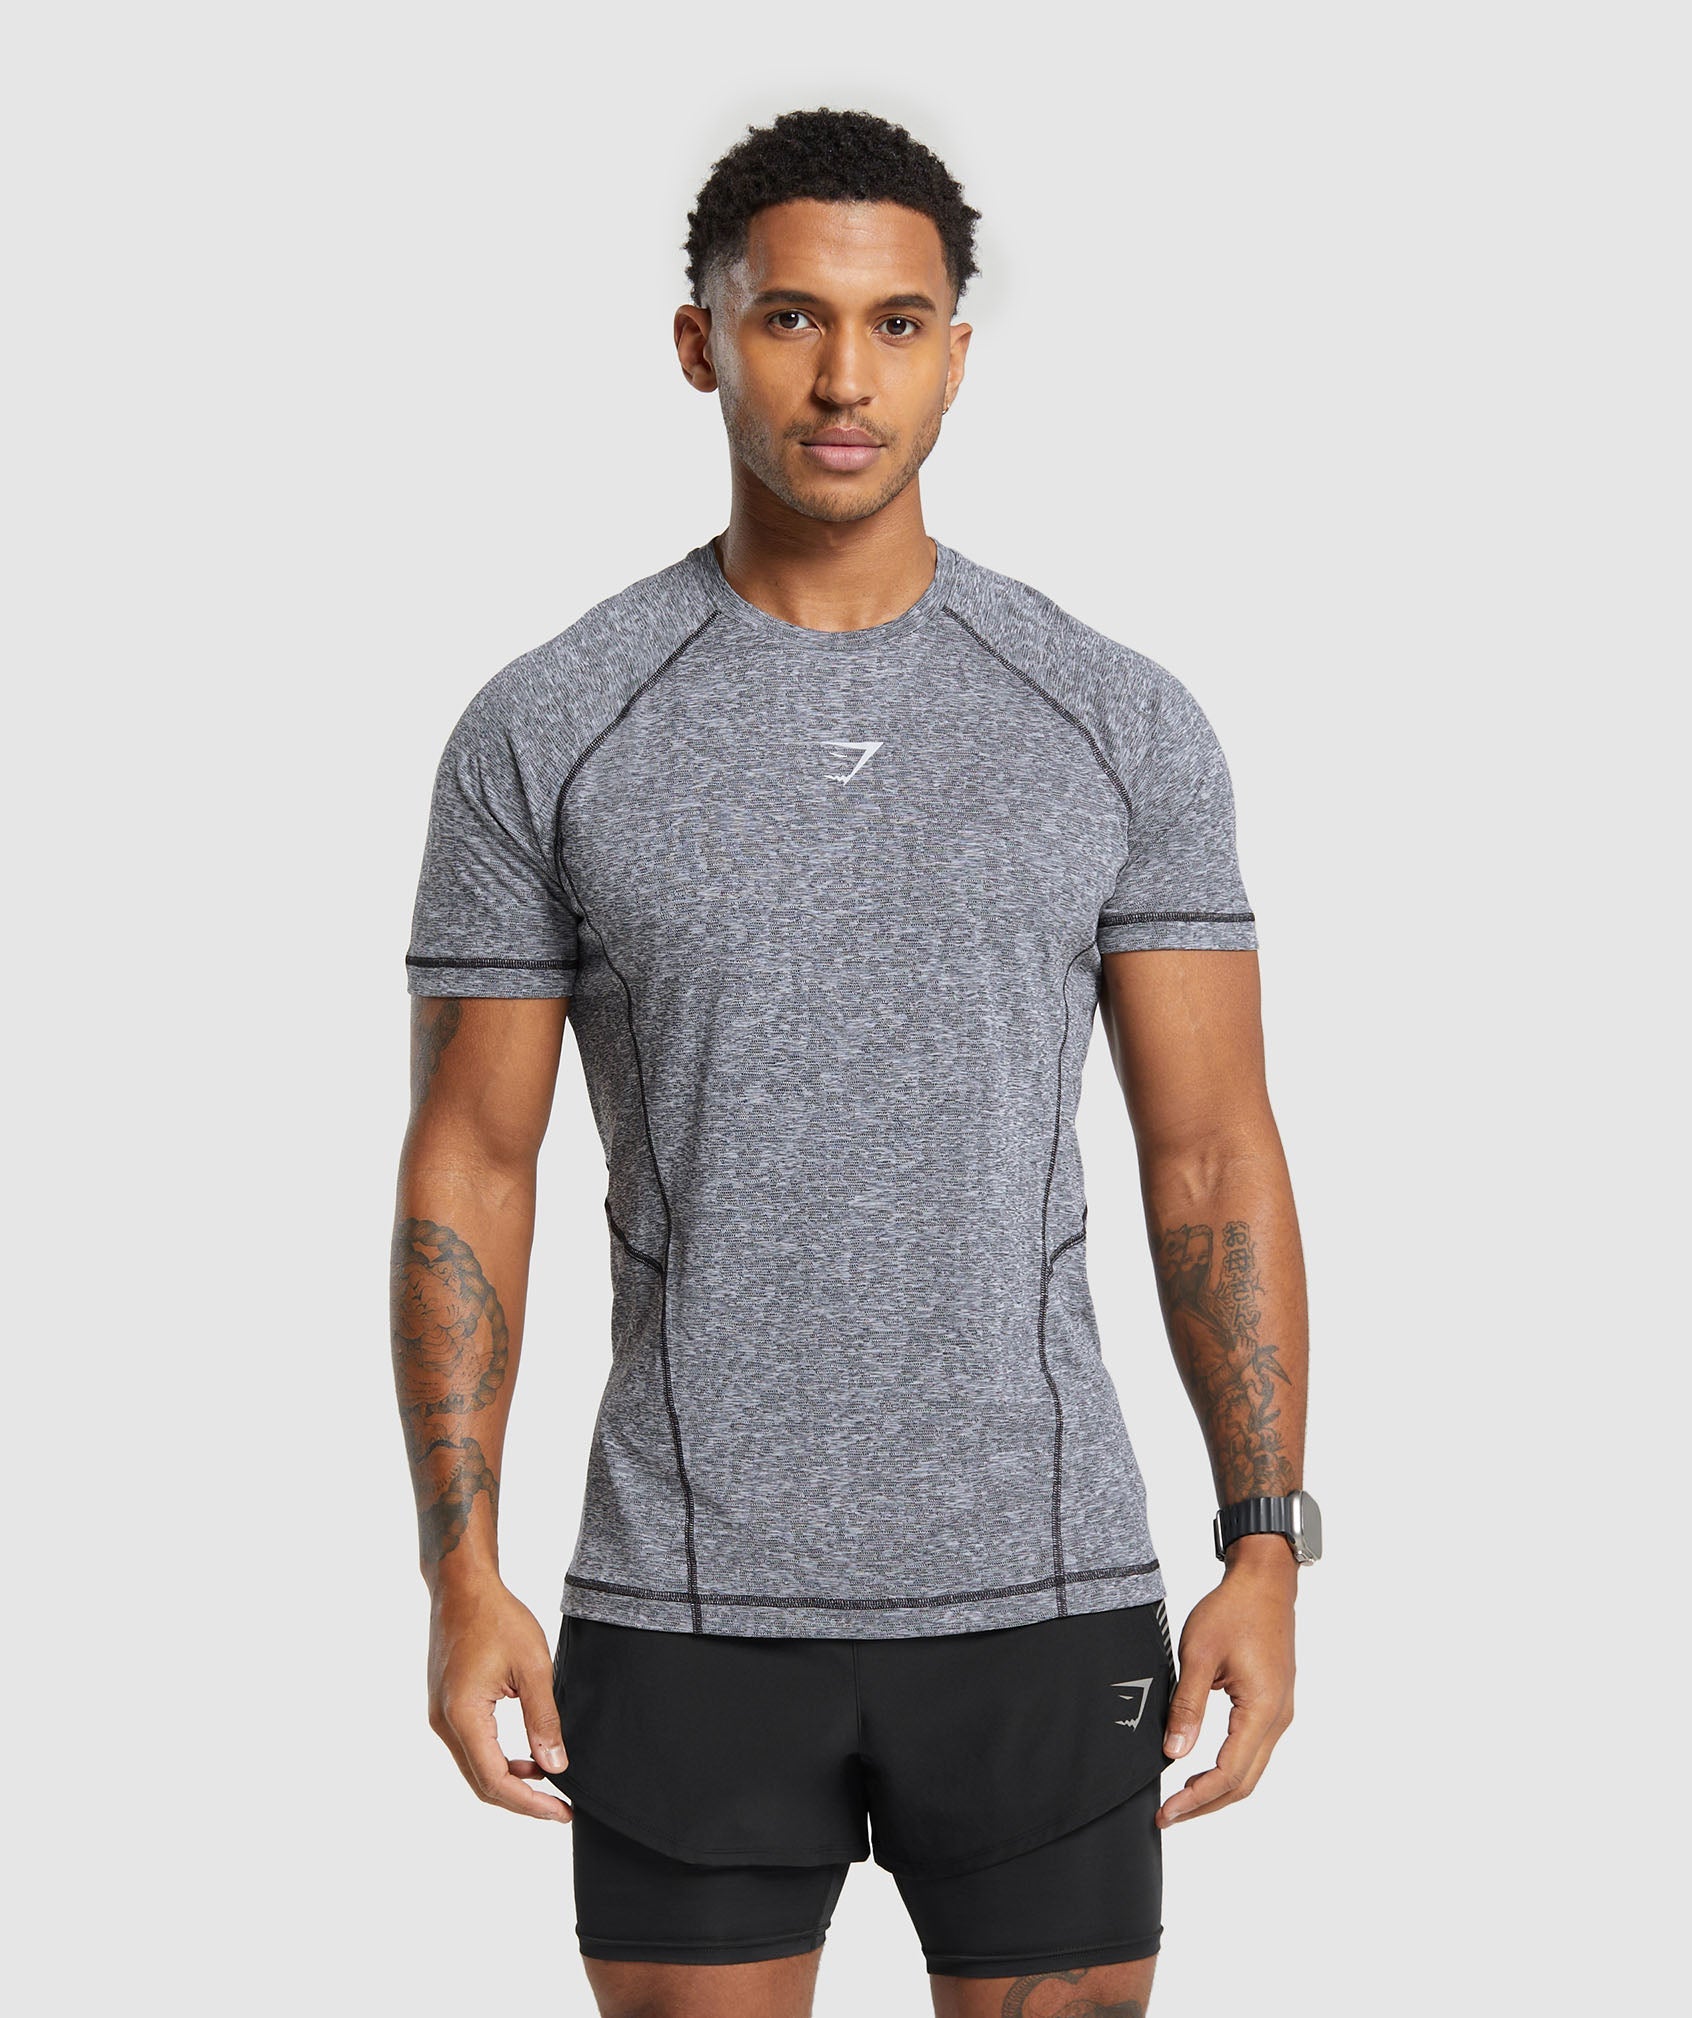 Apex T-Shirt in Black/Light Grey - view 1